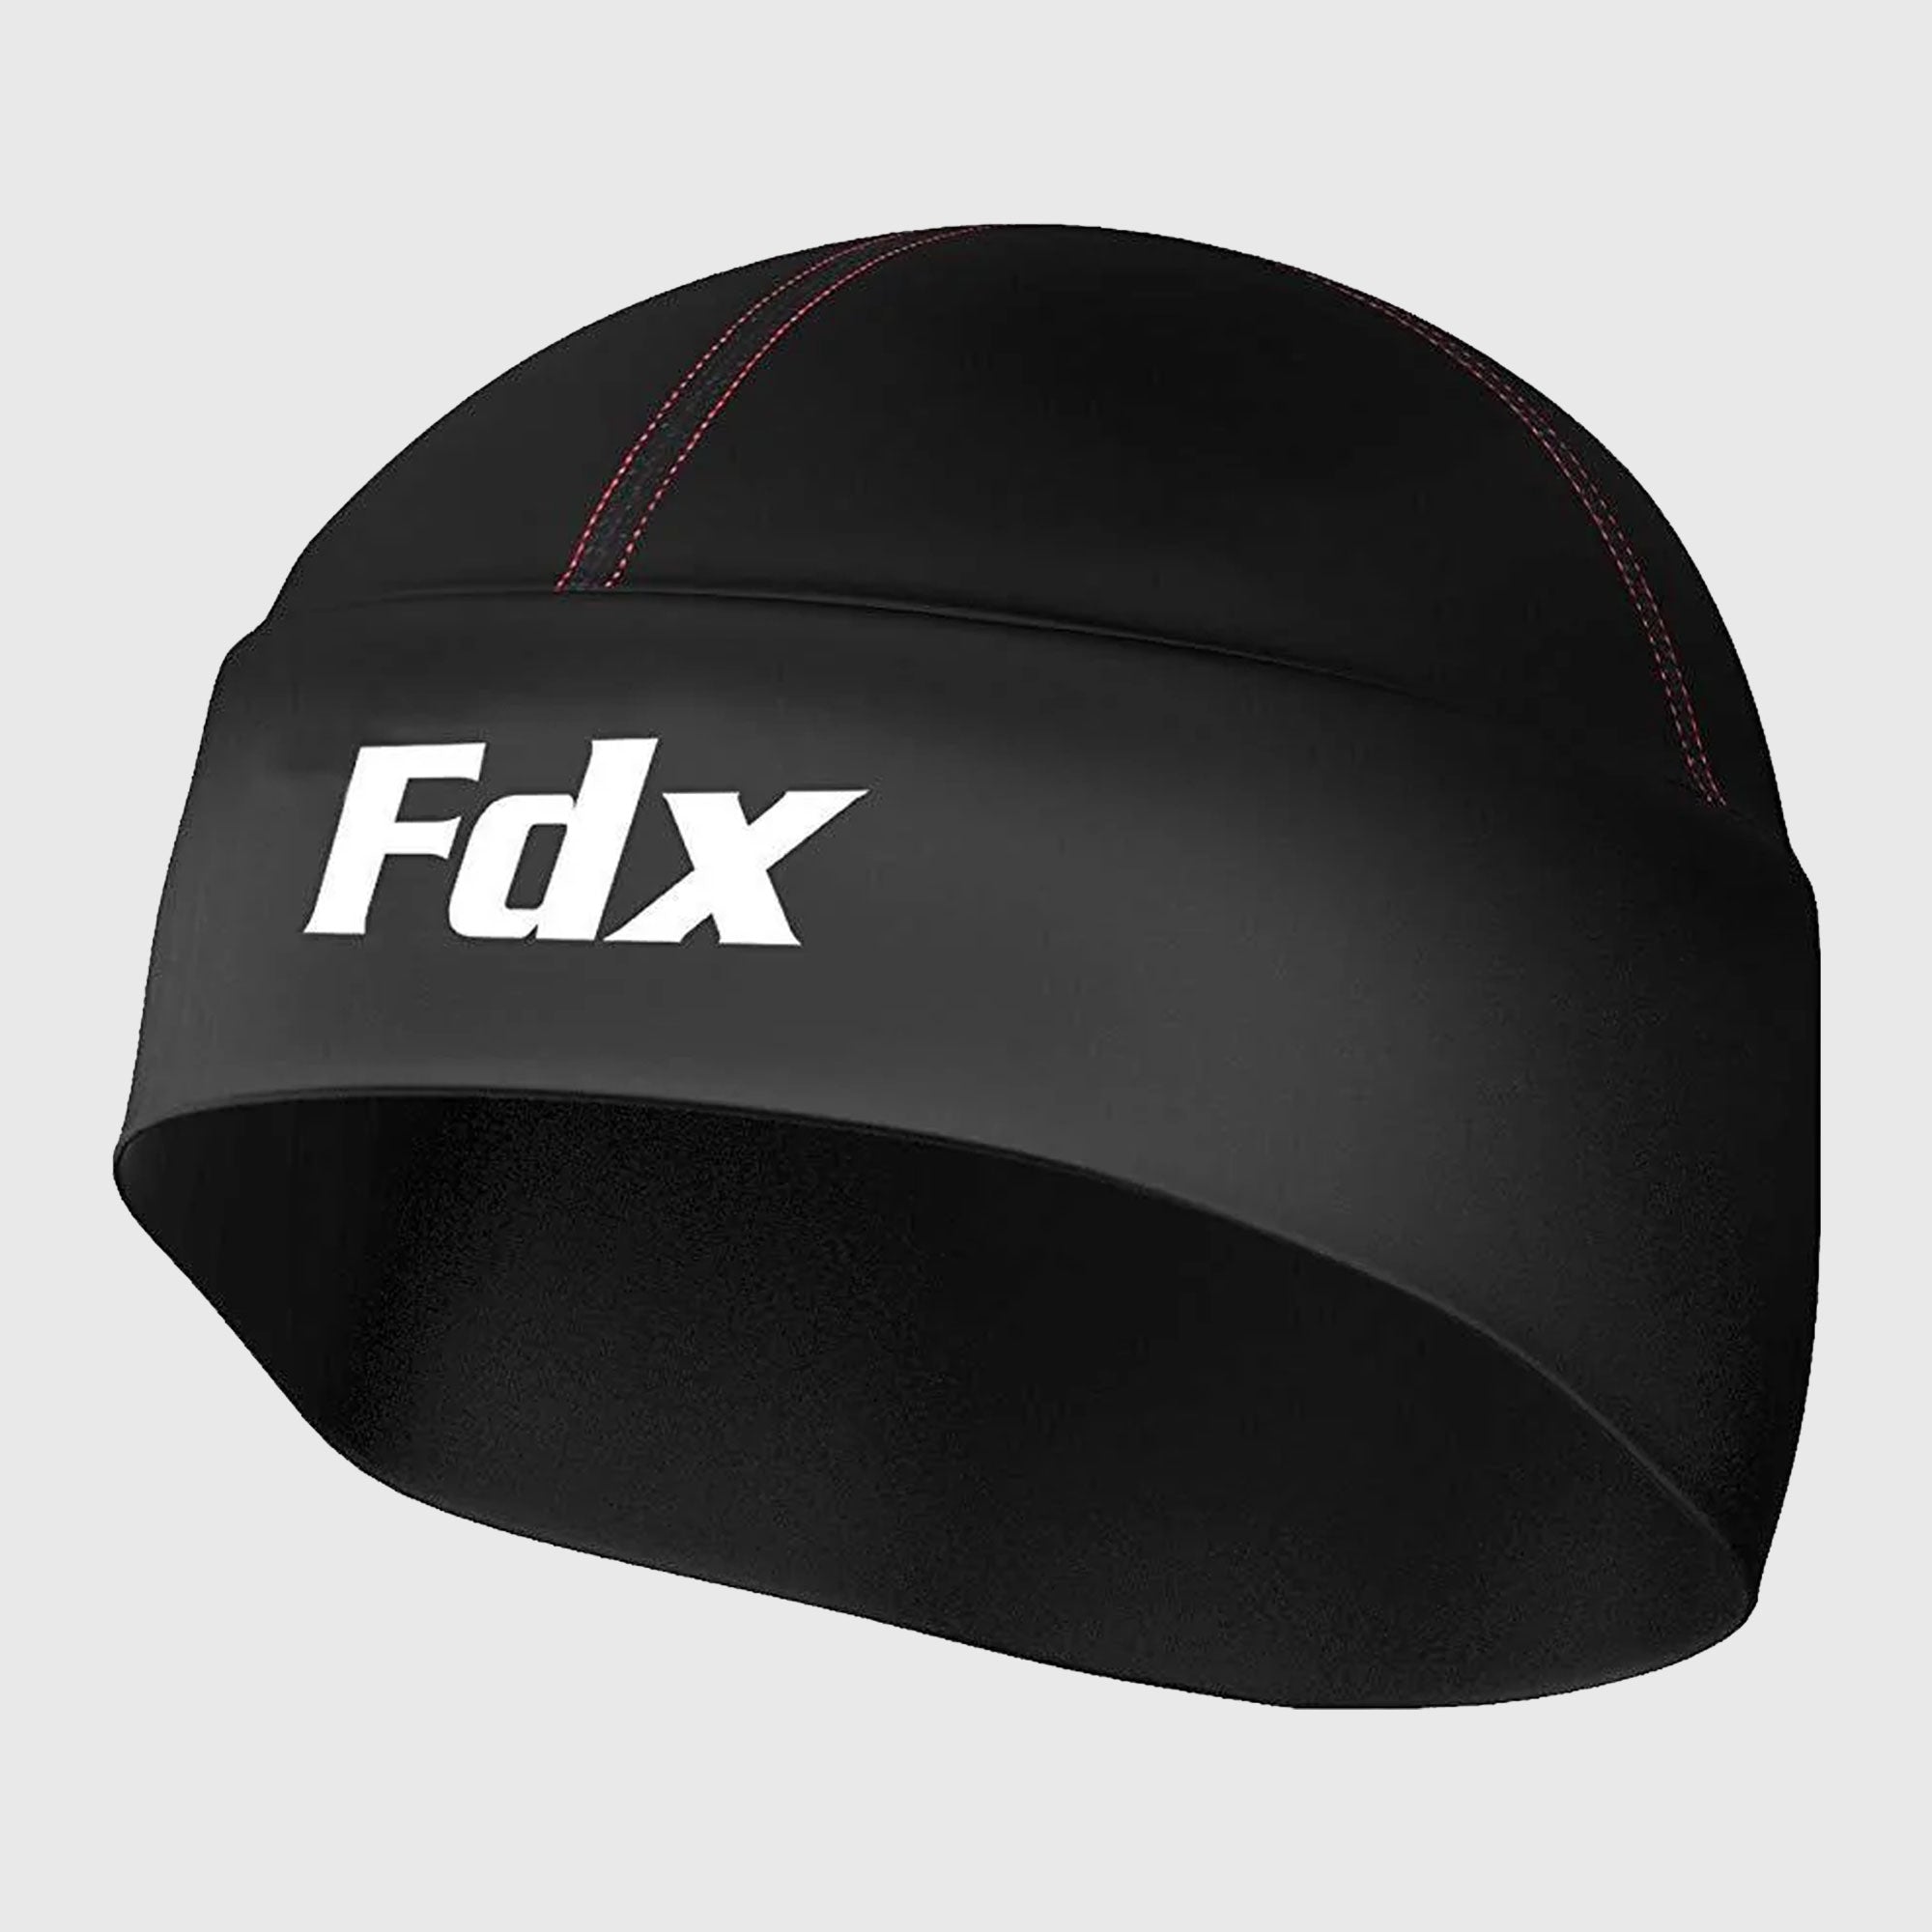 Fdx 8U Black Thermal Windproof Winter Cycling Skull Cap